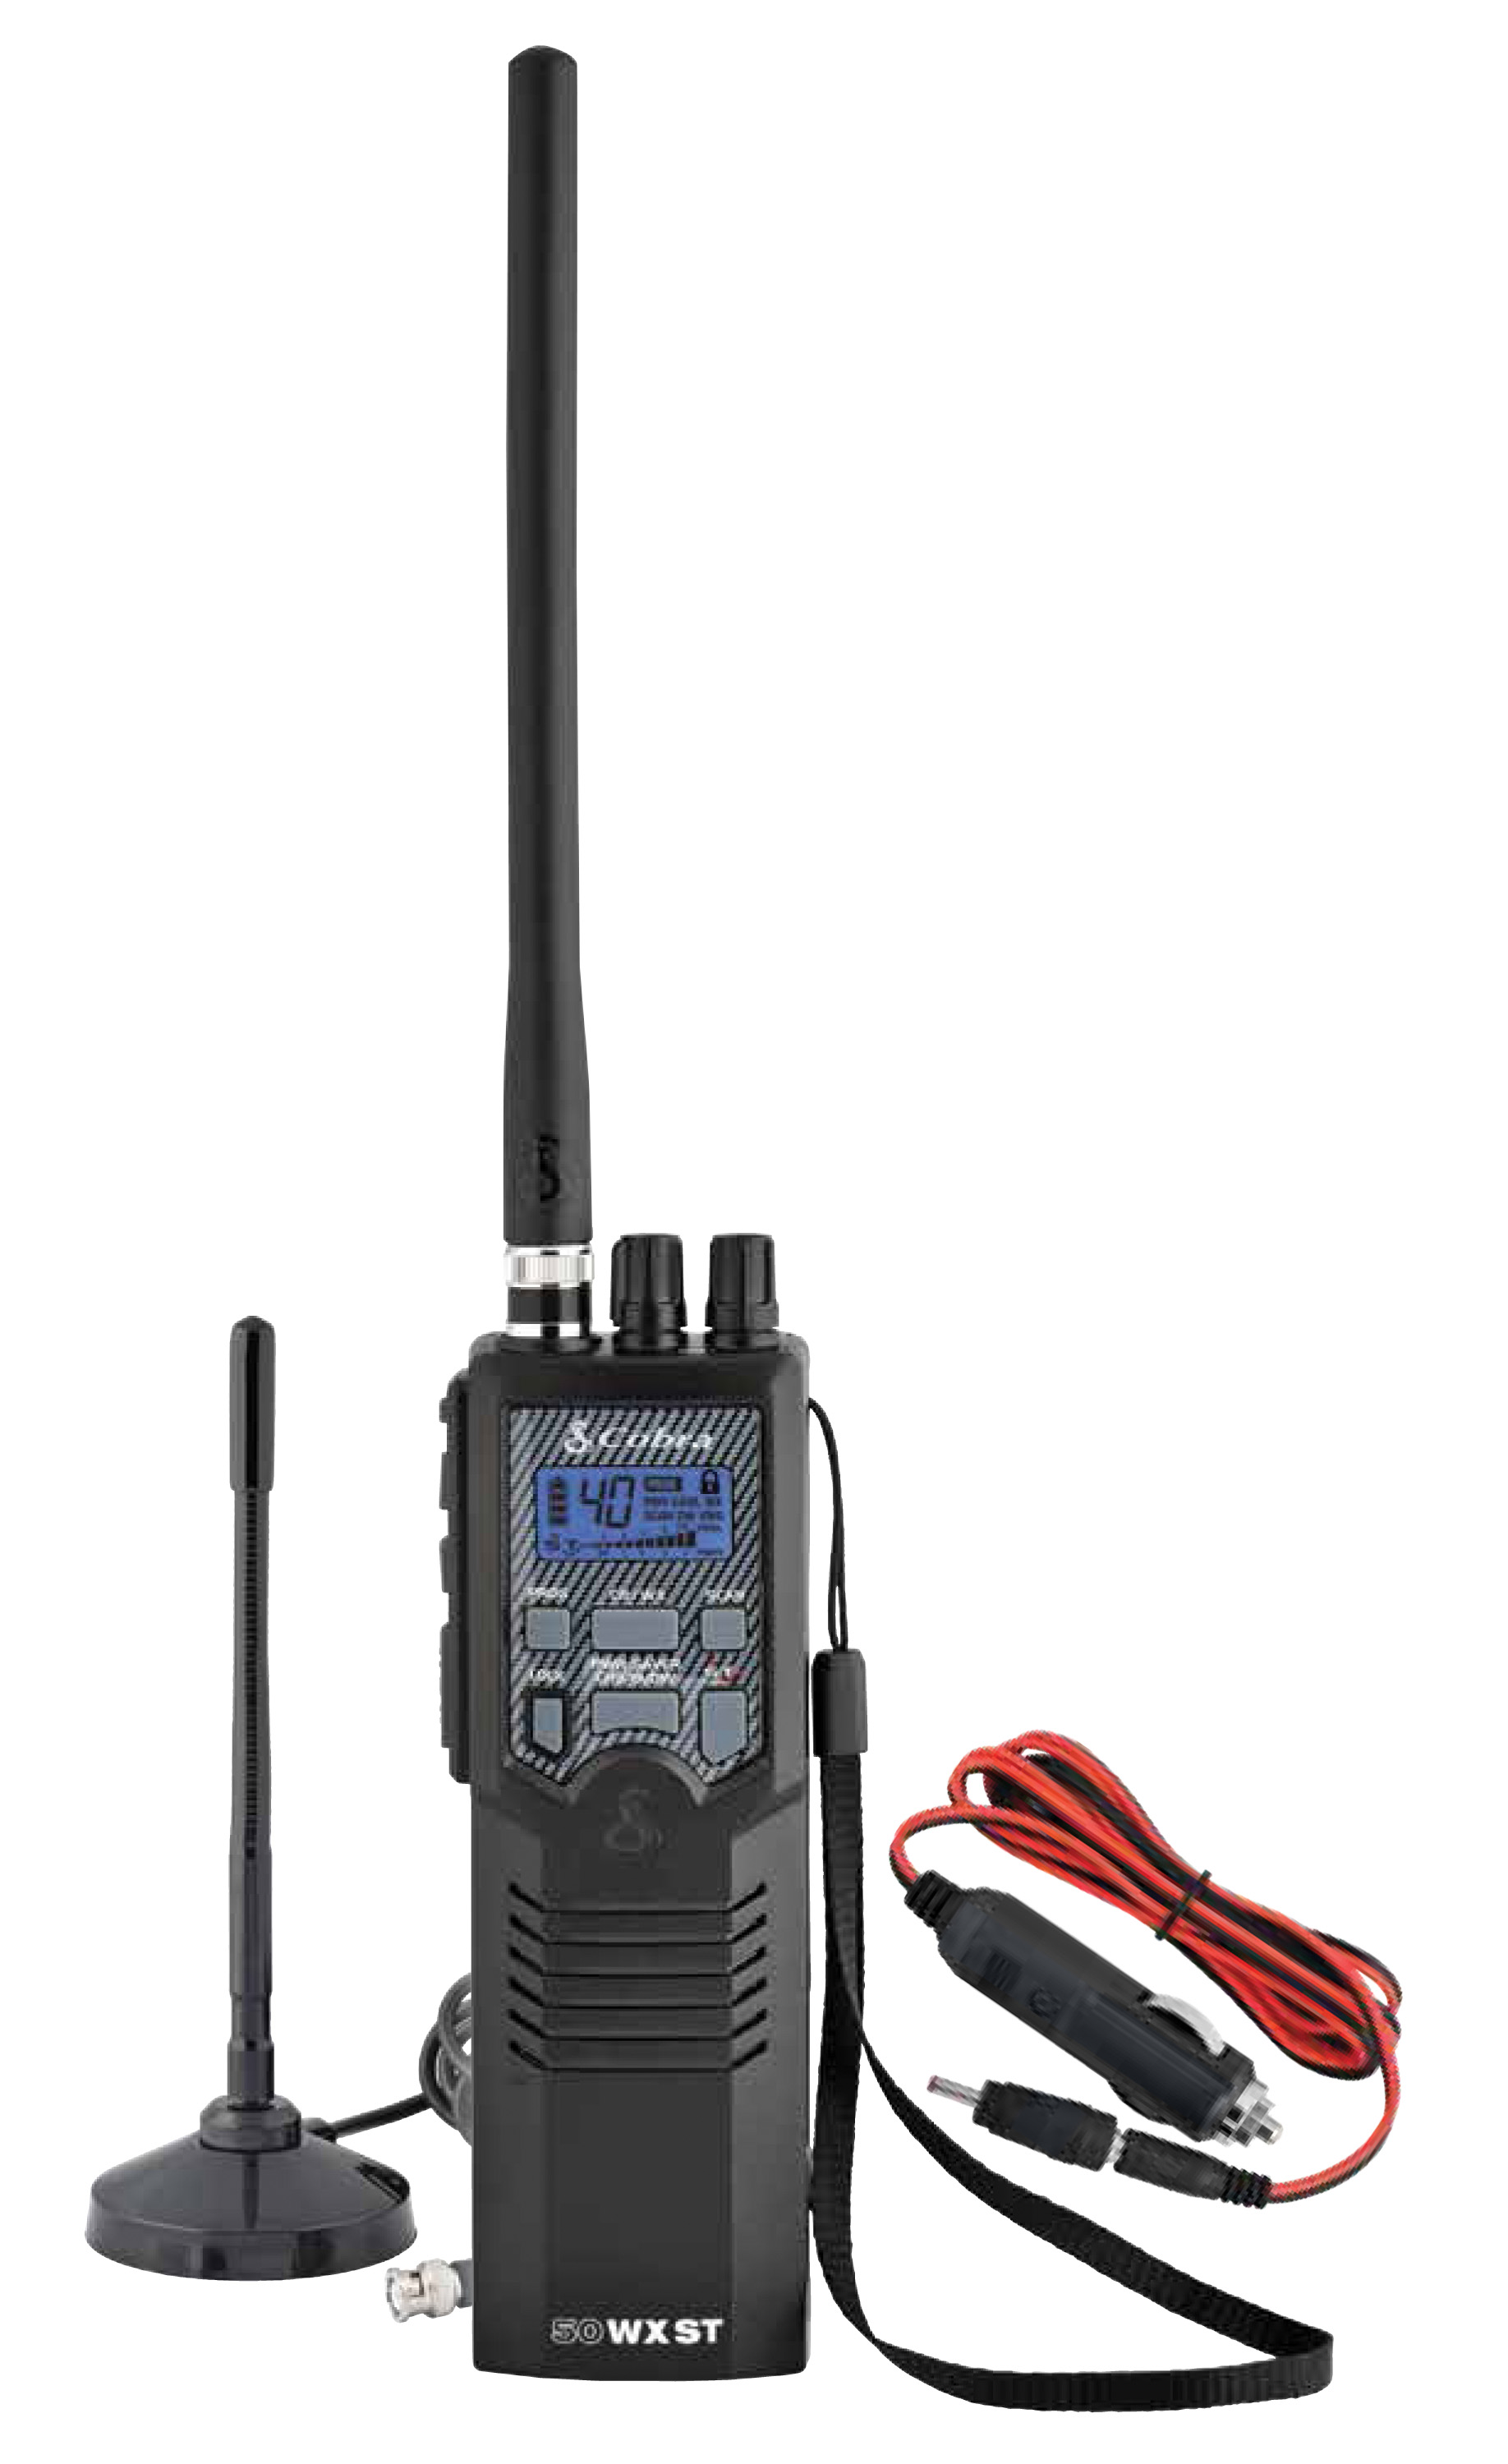 Cobra HHRT50 Road Trip Cb Radio,2-Way Handheld Cb Radio with Rooftop Magnet Mount Antenna, NOAA Channels, Dual Watch, 40 Channel, Black - image 1 of 5